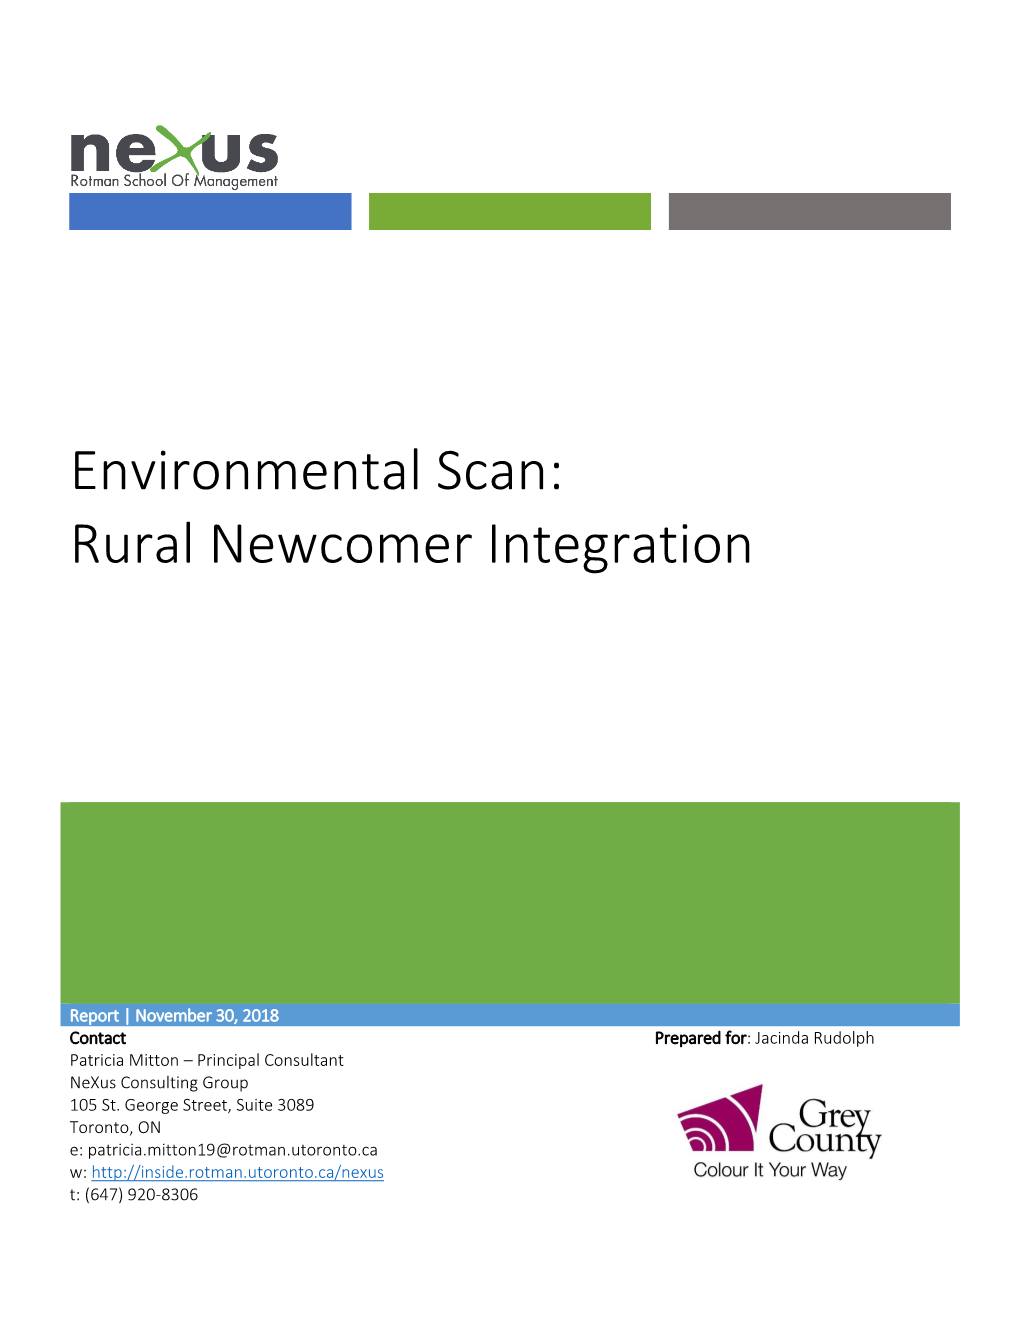 Environmental Scan: Rural Newcomer Integration